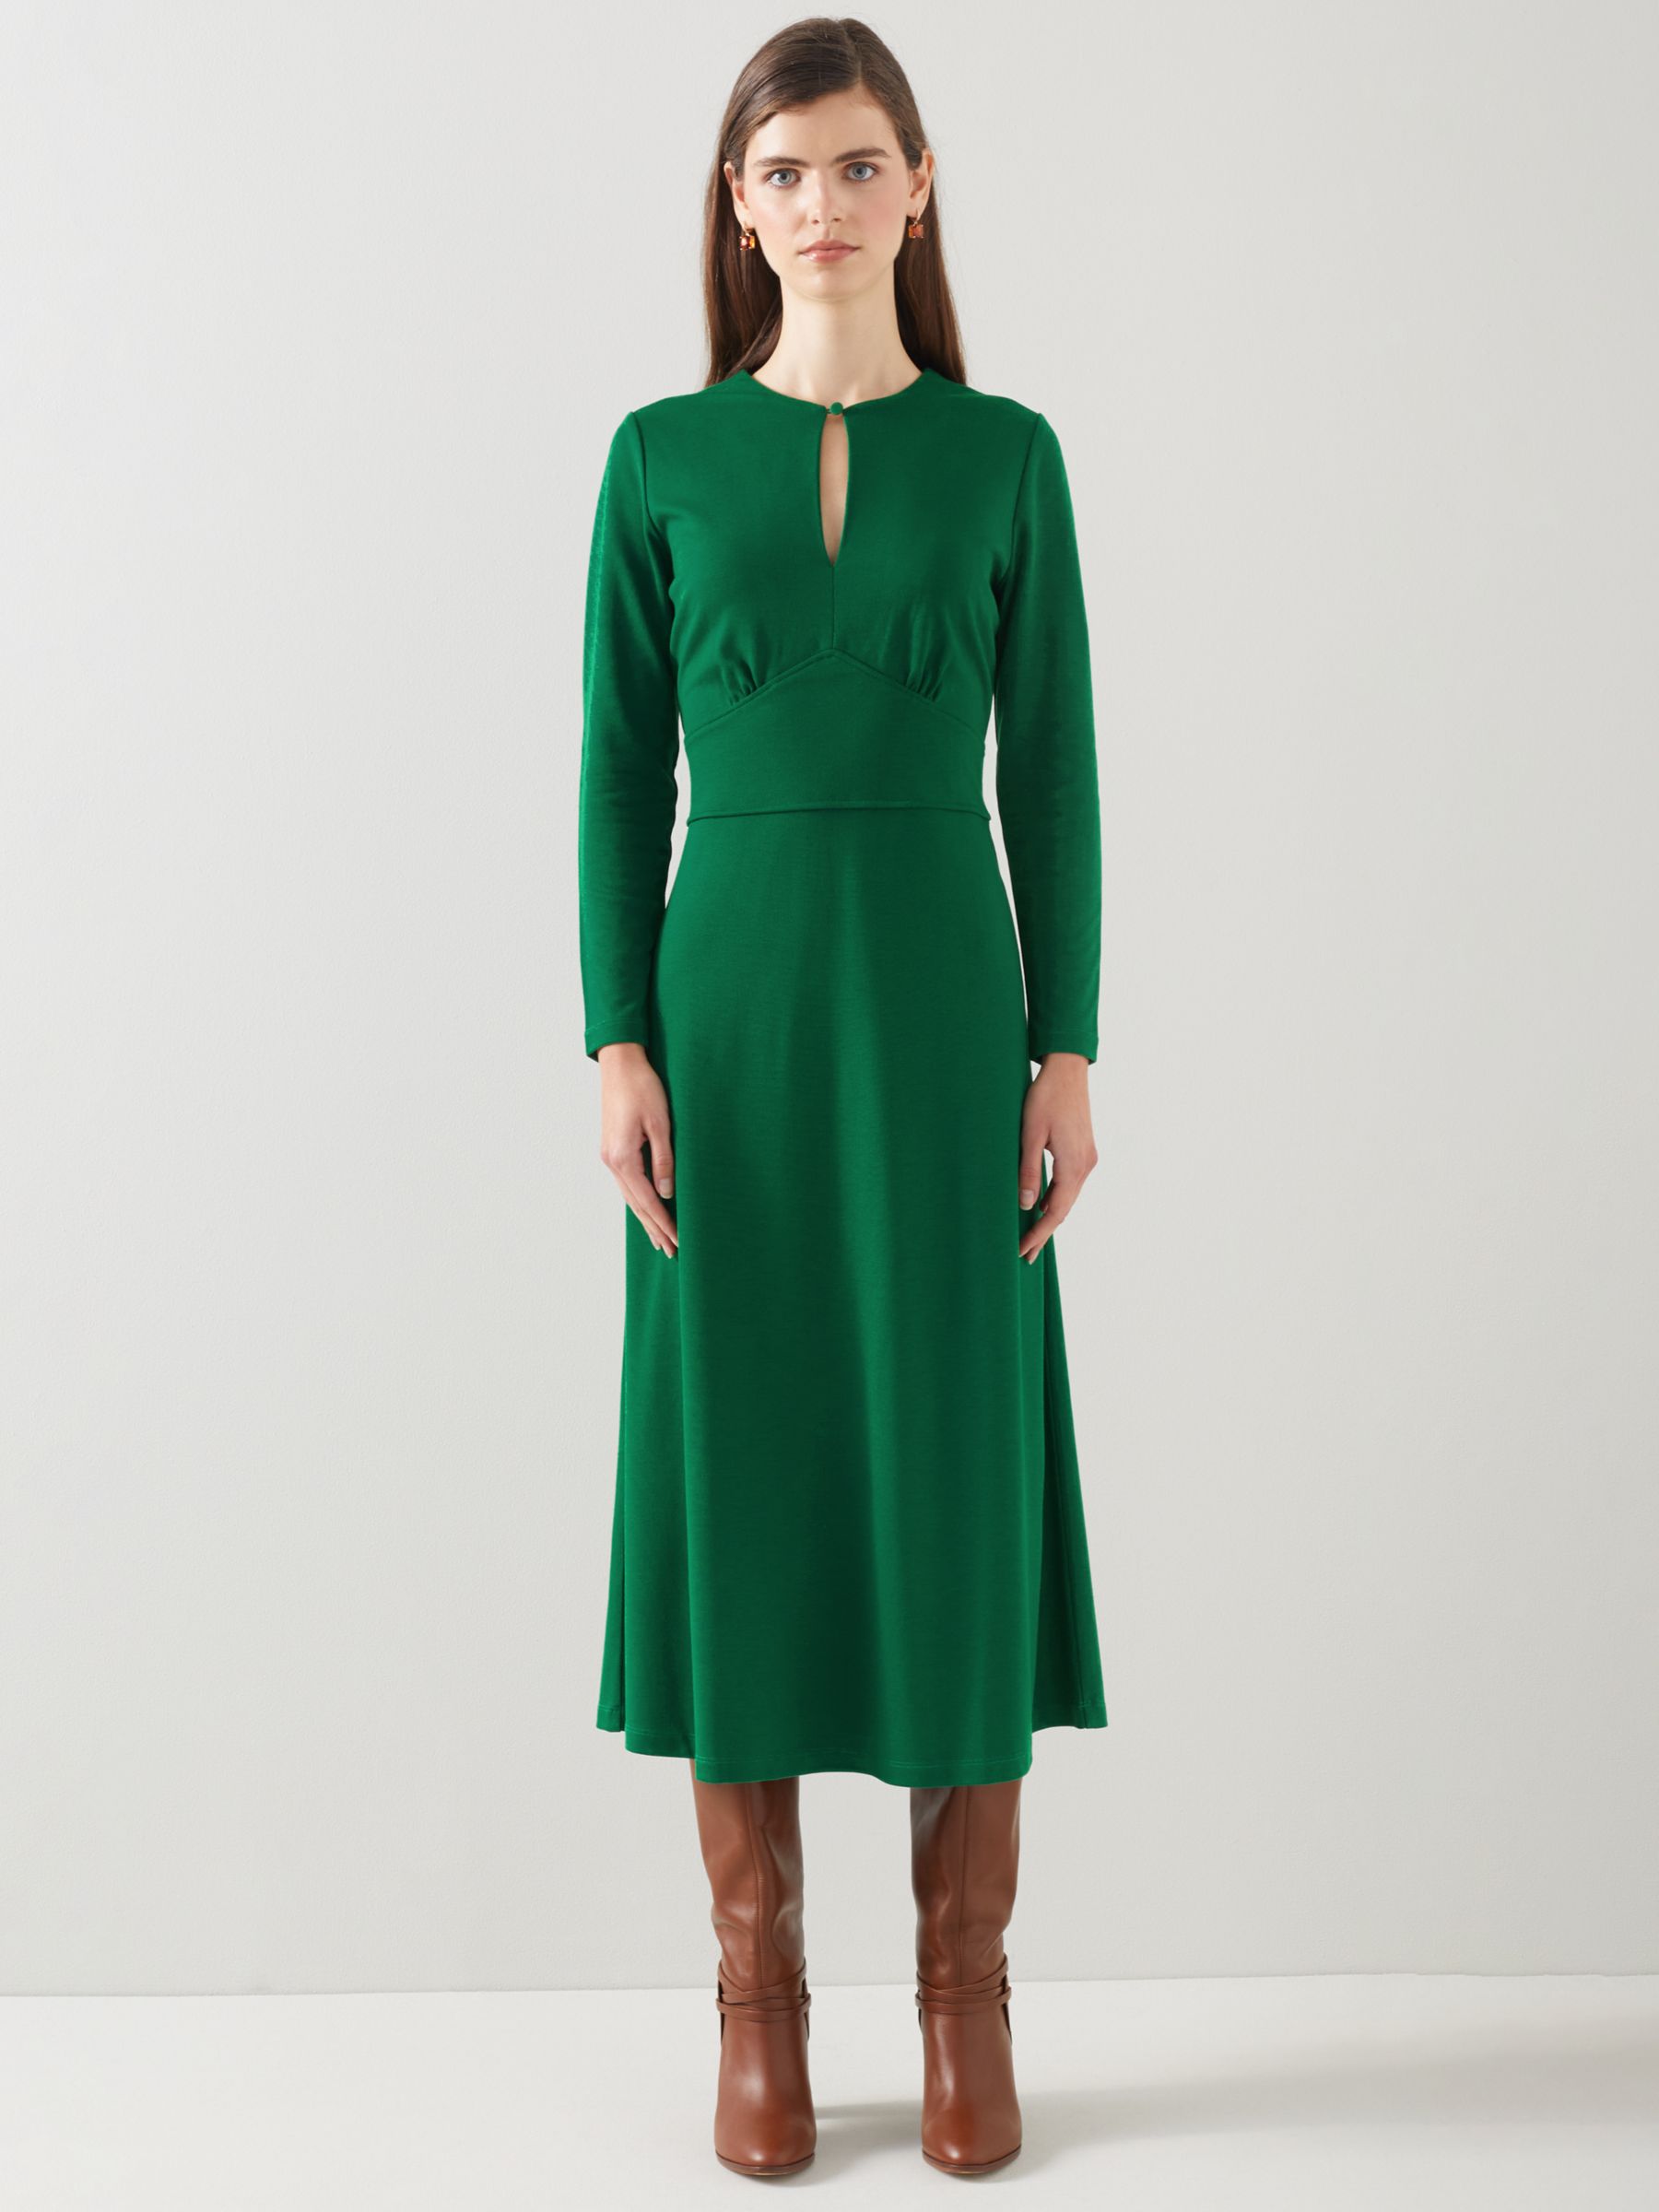 L.K.Bennett Sera Viscose Mix Dress, Dark Green at John Lewis & Partners